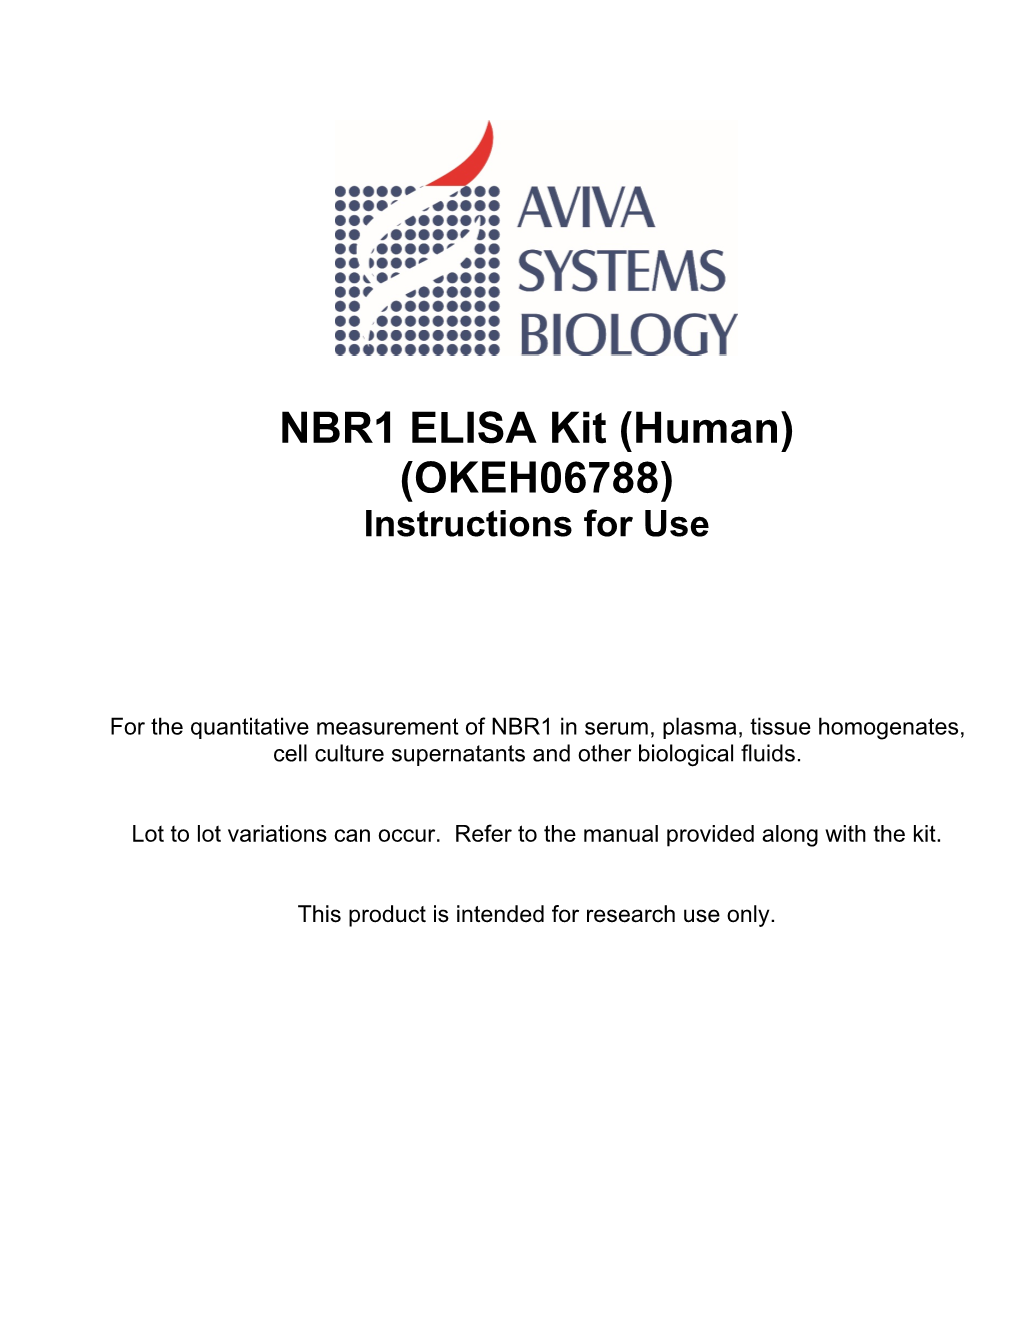 NBR1 ELISA Kit (Human) (OKEH06788) Instructions for Use